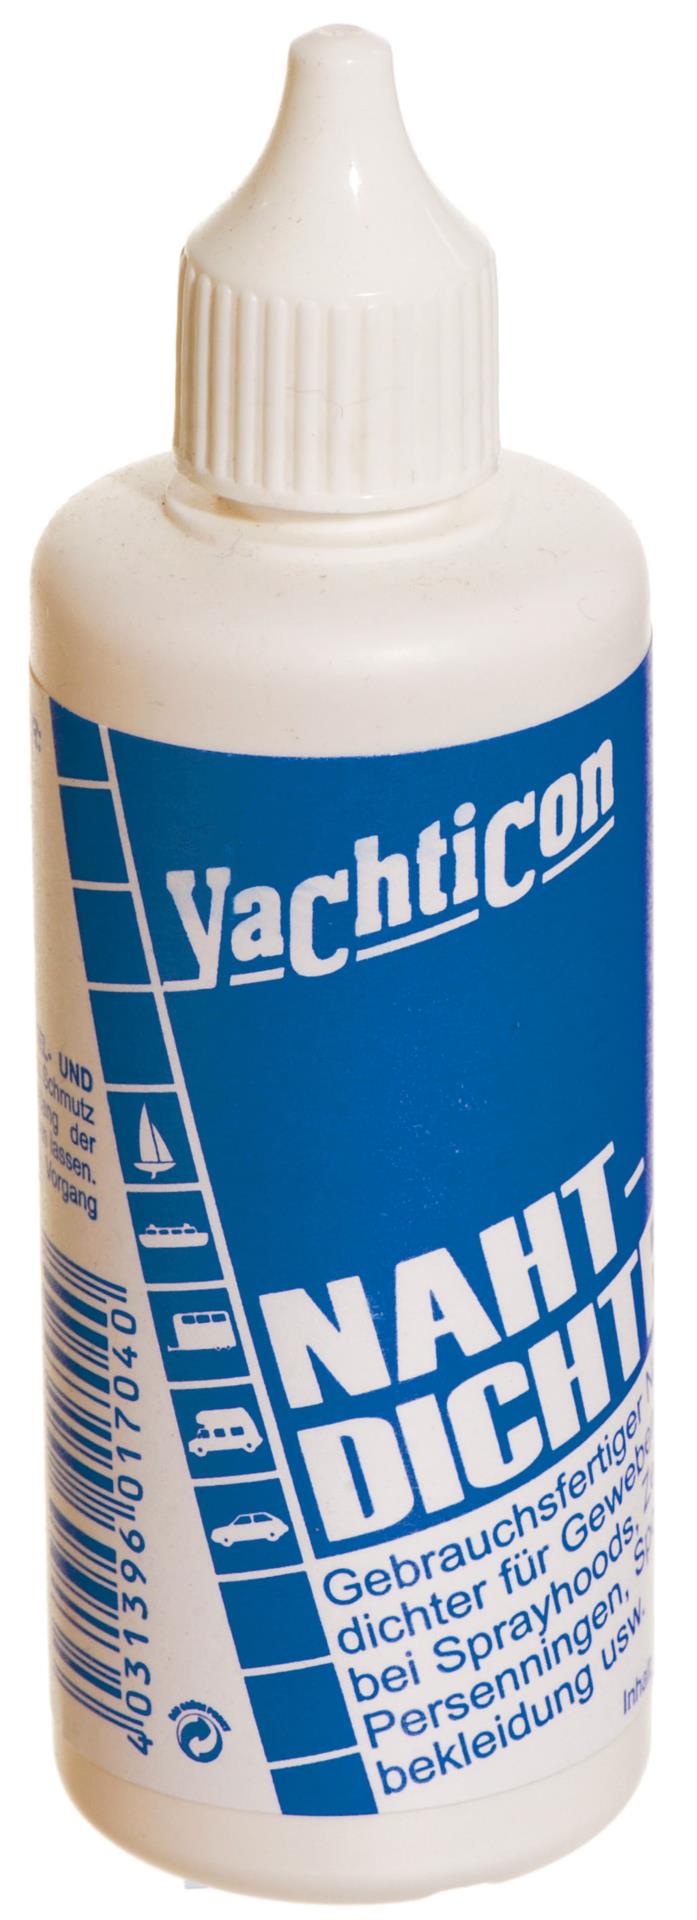 Yachticon Nahtdichter,100 ml